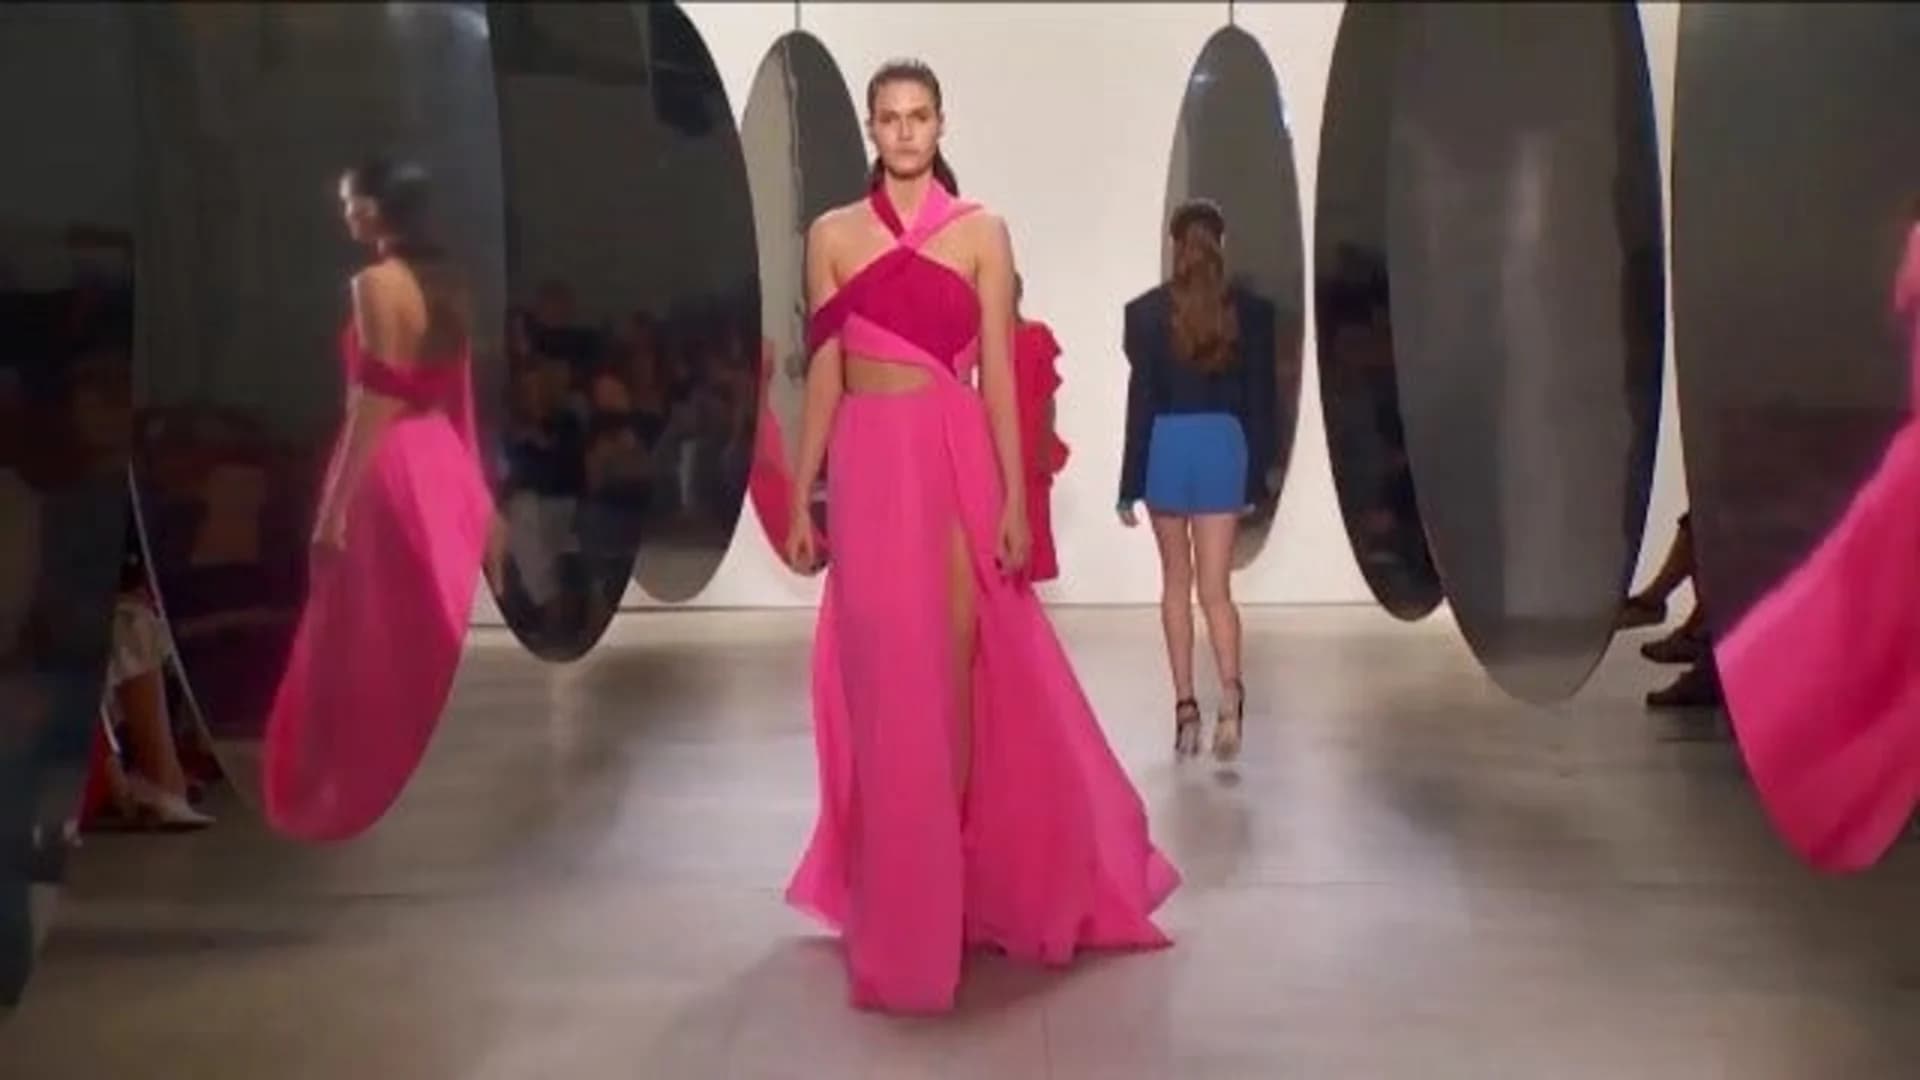 Ruffles, big prints and bold colors rule the runway at Fashion Week